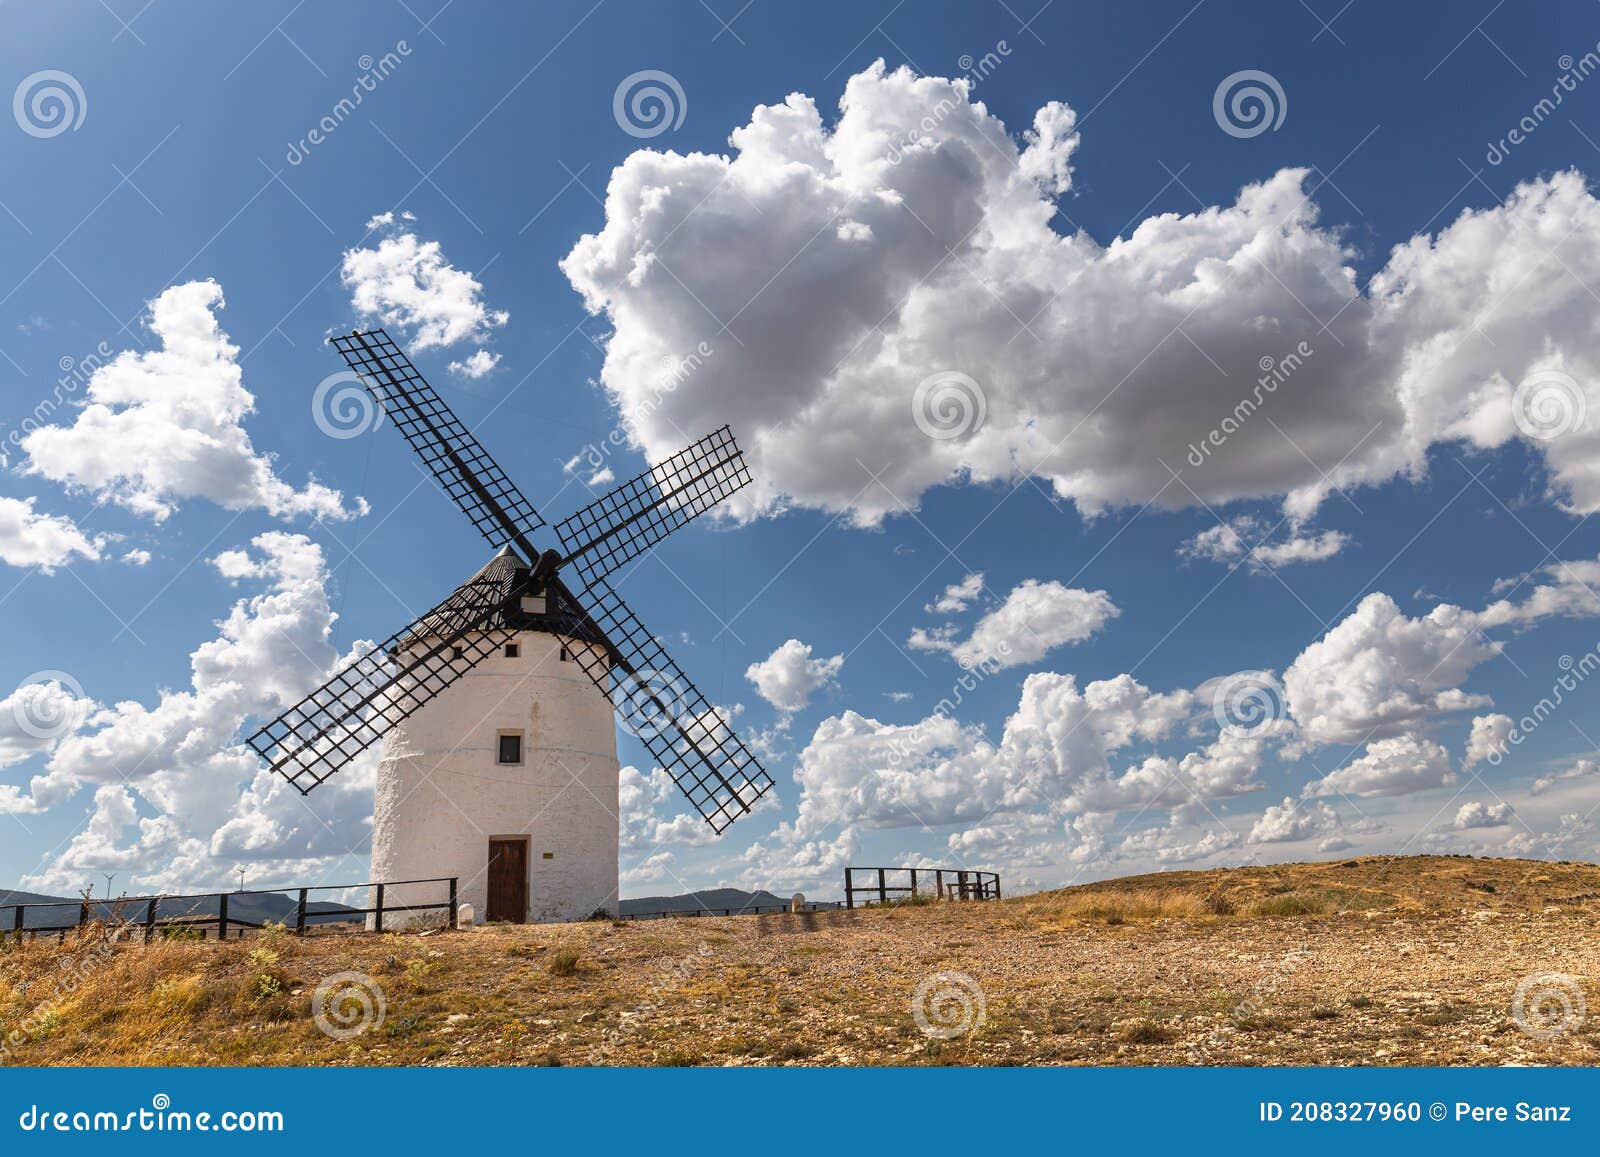 tradicional windmill in teruel, spain